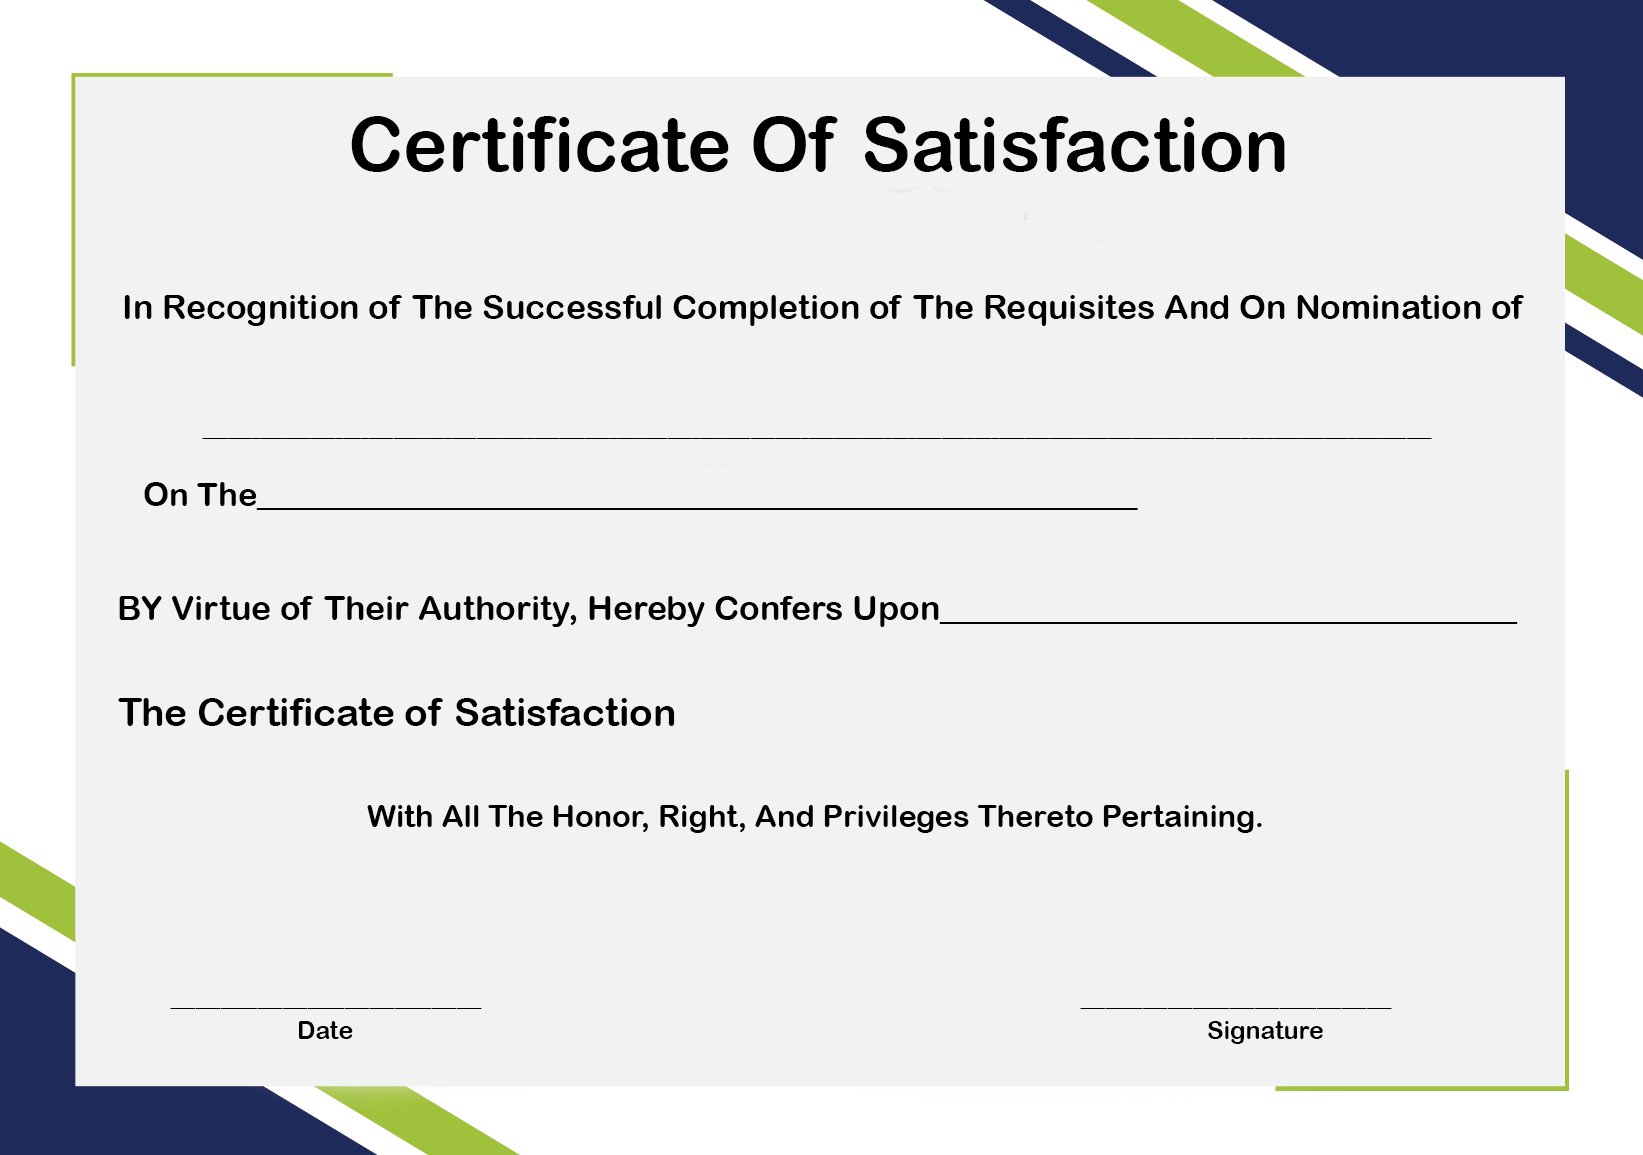 Certificate of Satisfaction Form 